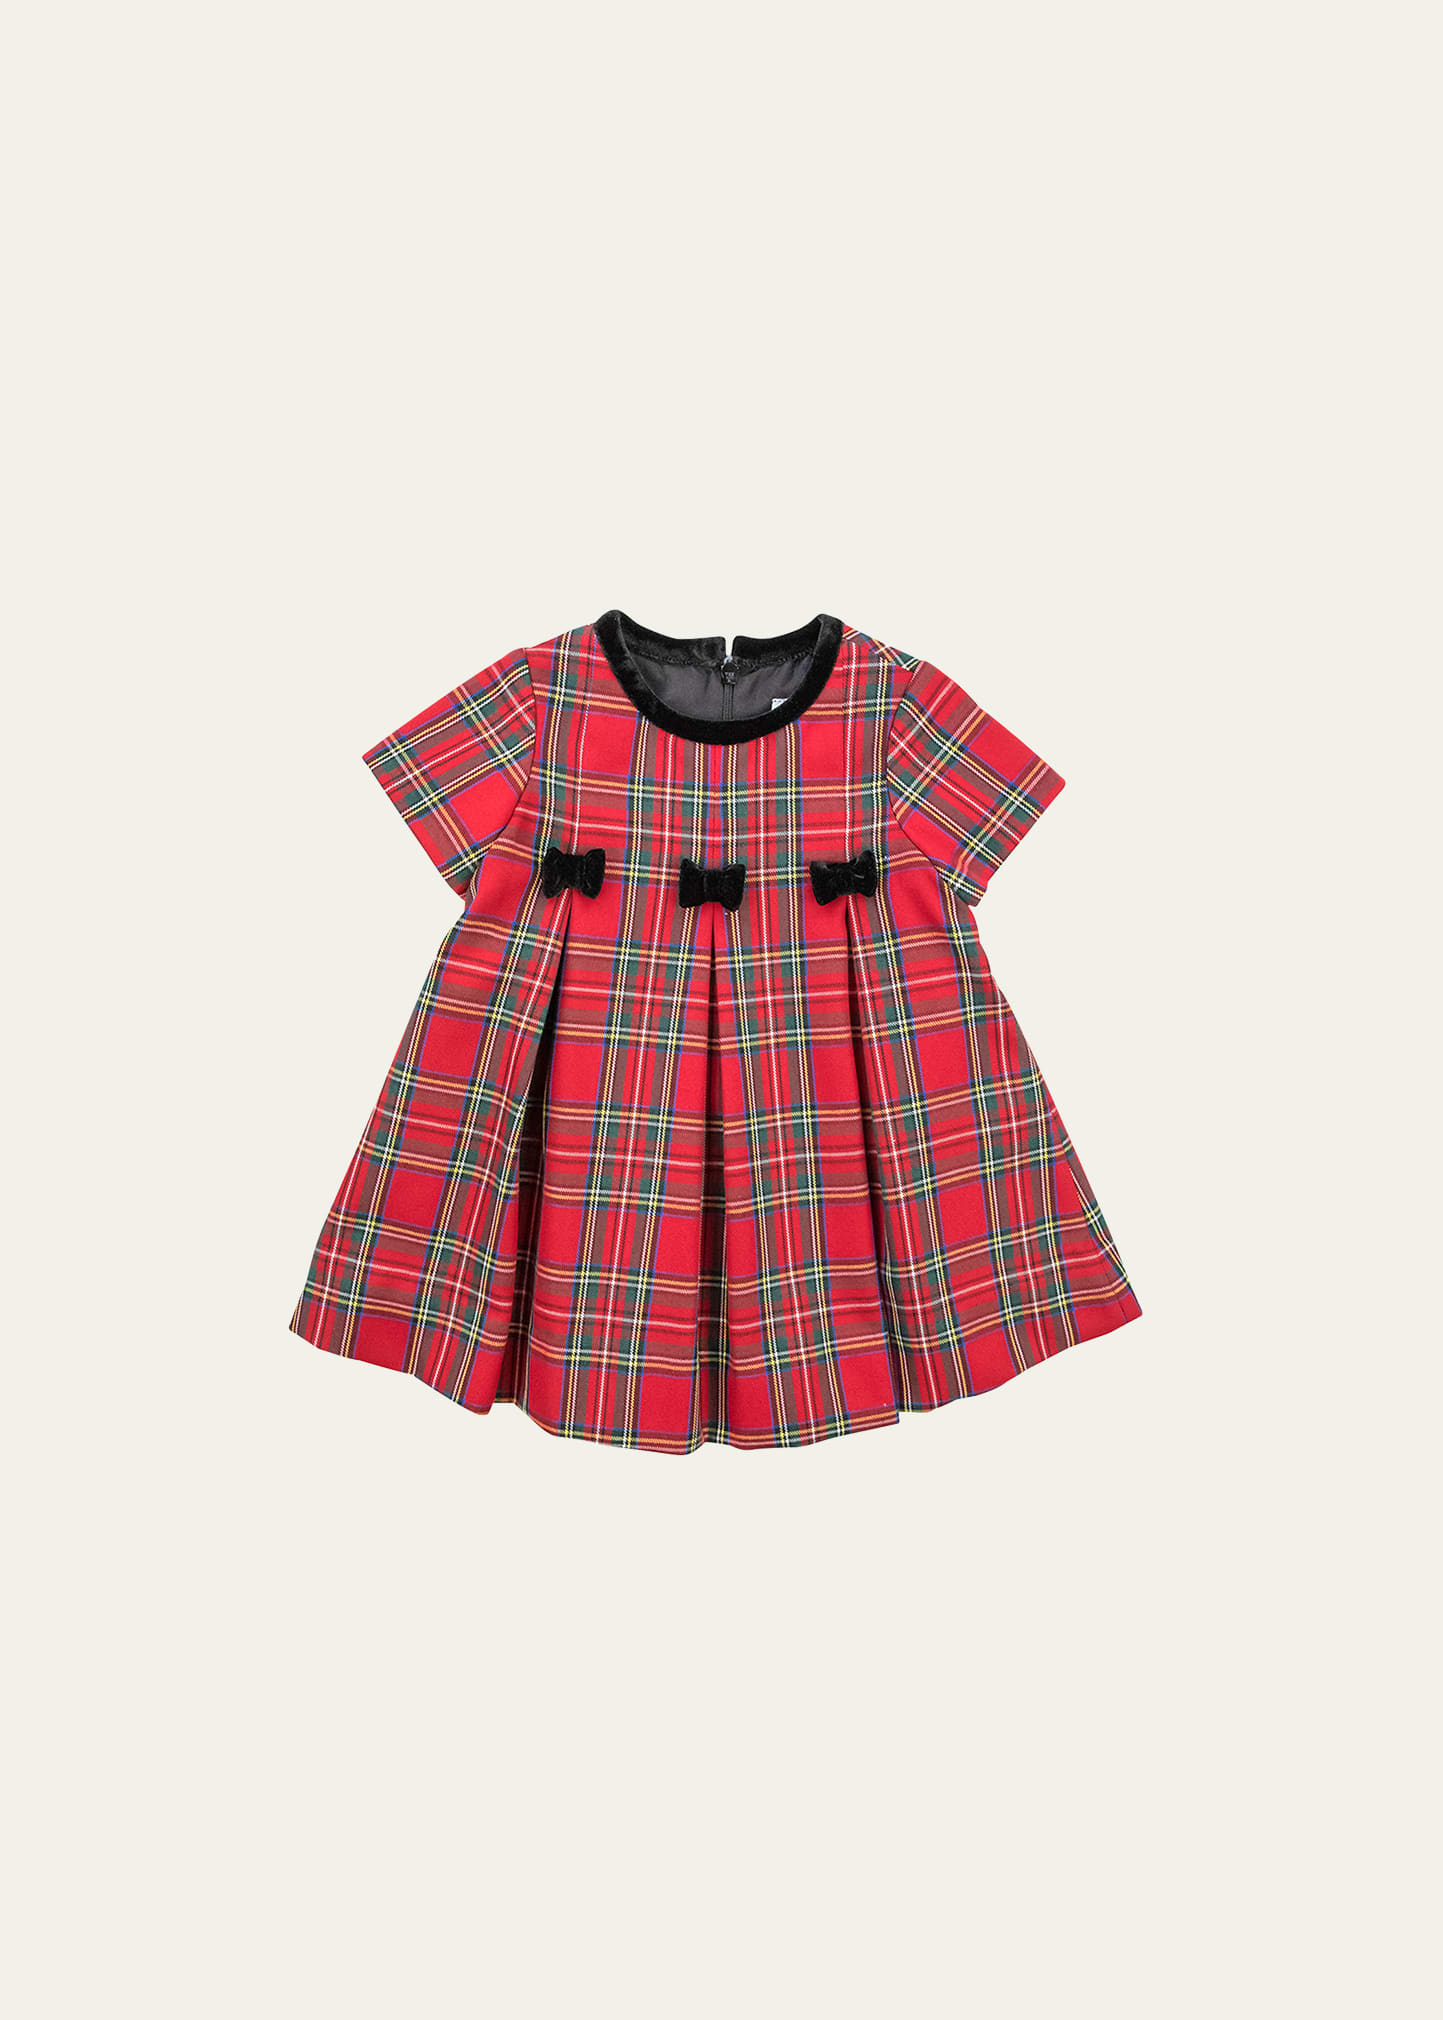 Florence Eiseman Girl's Pleated Plaid Dress, Size 2-4